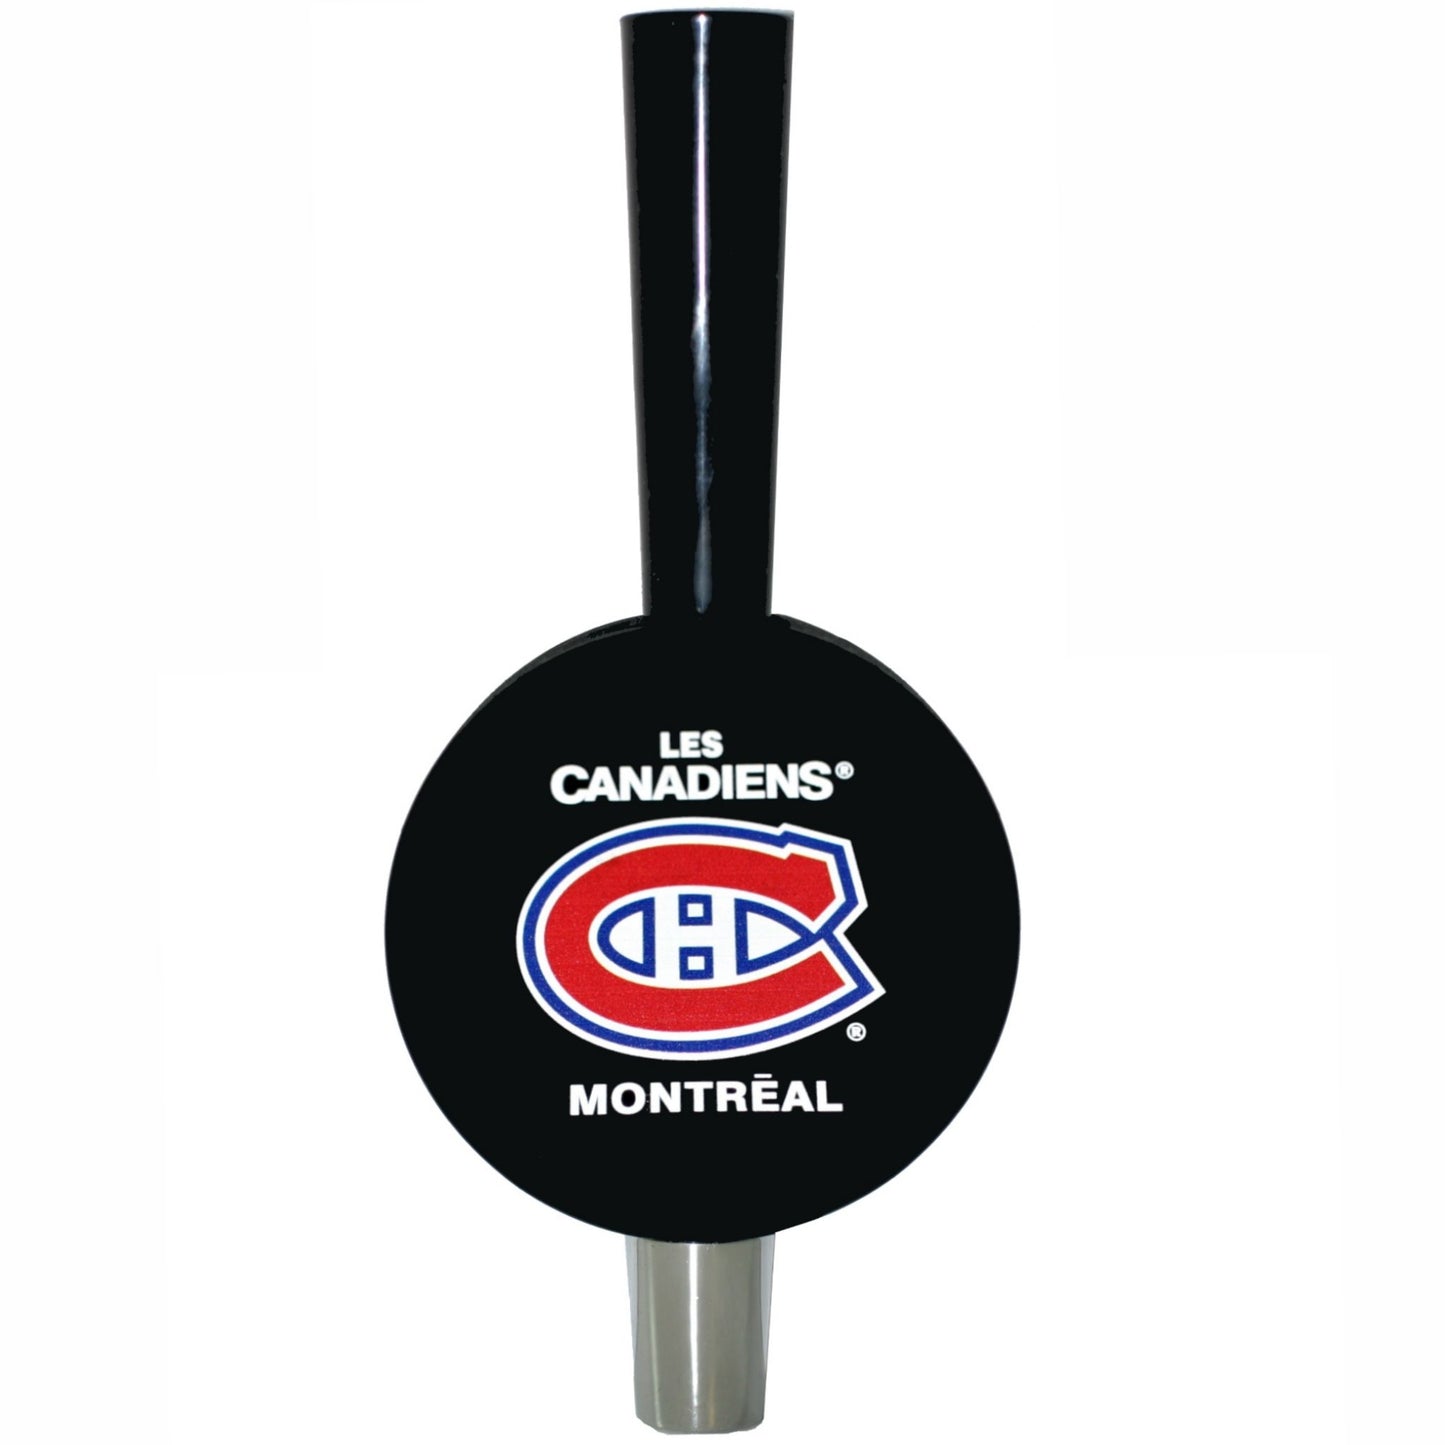 Montreal Canadiens Tall-Boy Hockey Puck Beer Tap Handle